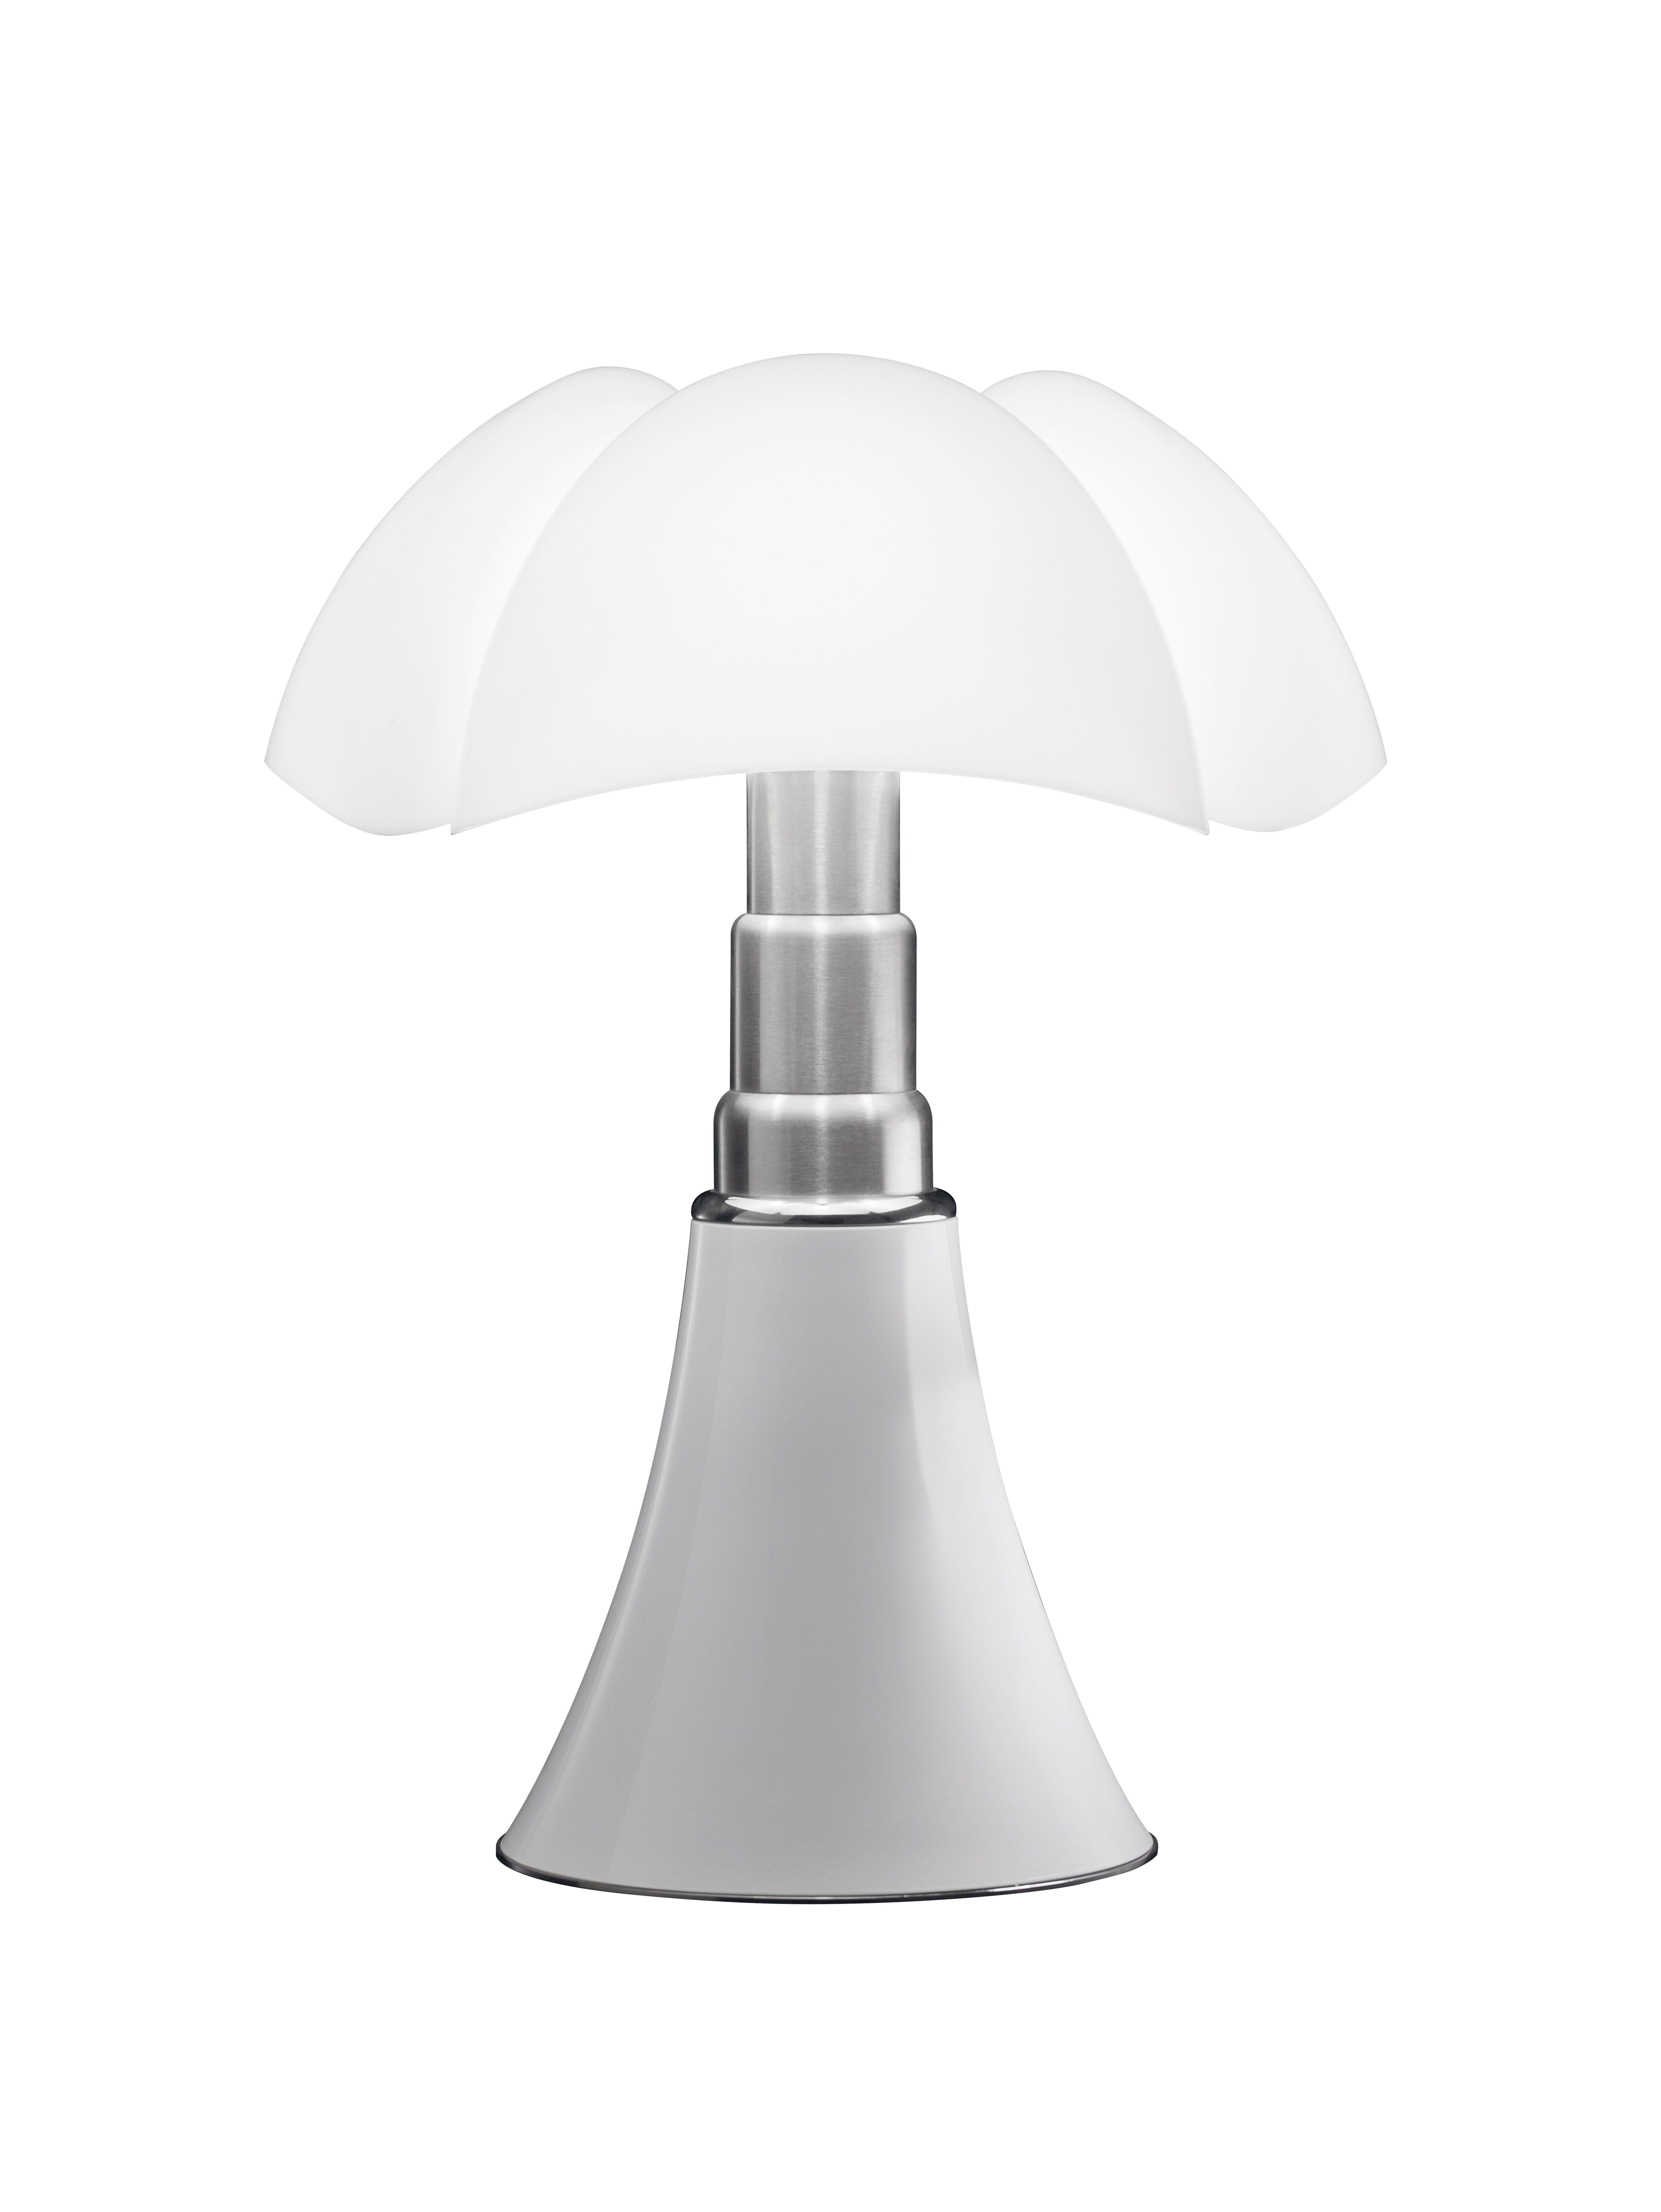 En vente : White (Bianco) Lampe de bureau Martinelli Luce à LED à gradation Pipistrello 620 de Gae Aulenti